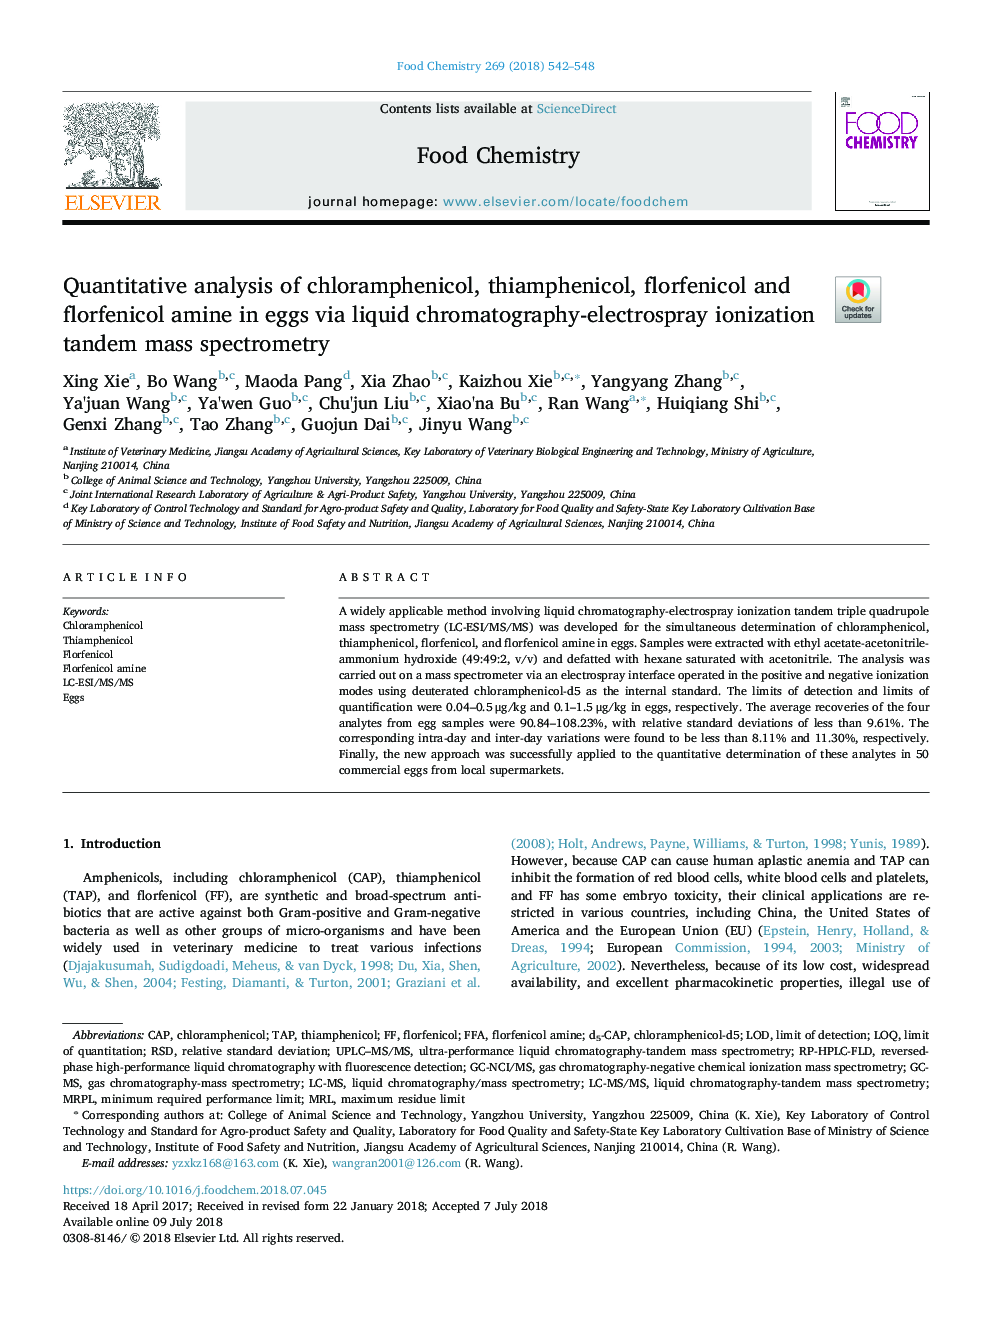 Quantitative analysis of chloramphenicol, thiamphenicol, florfenicol and florfenicol amine in eggs via liquid chromatography-electrospray ionization tandem mass spectrometry